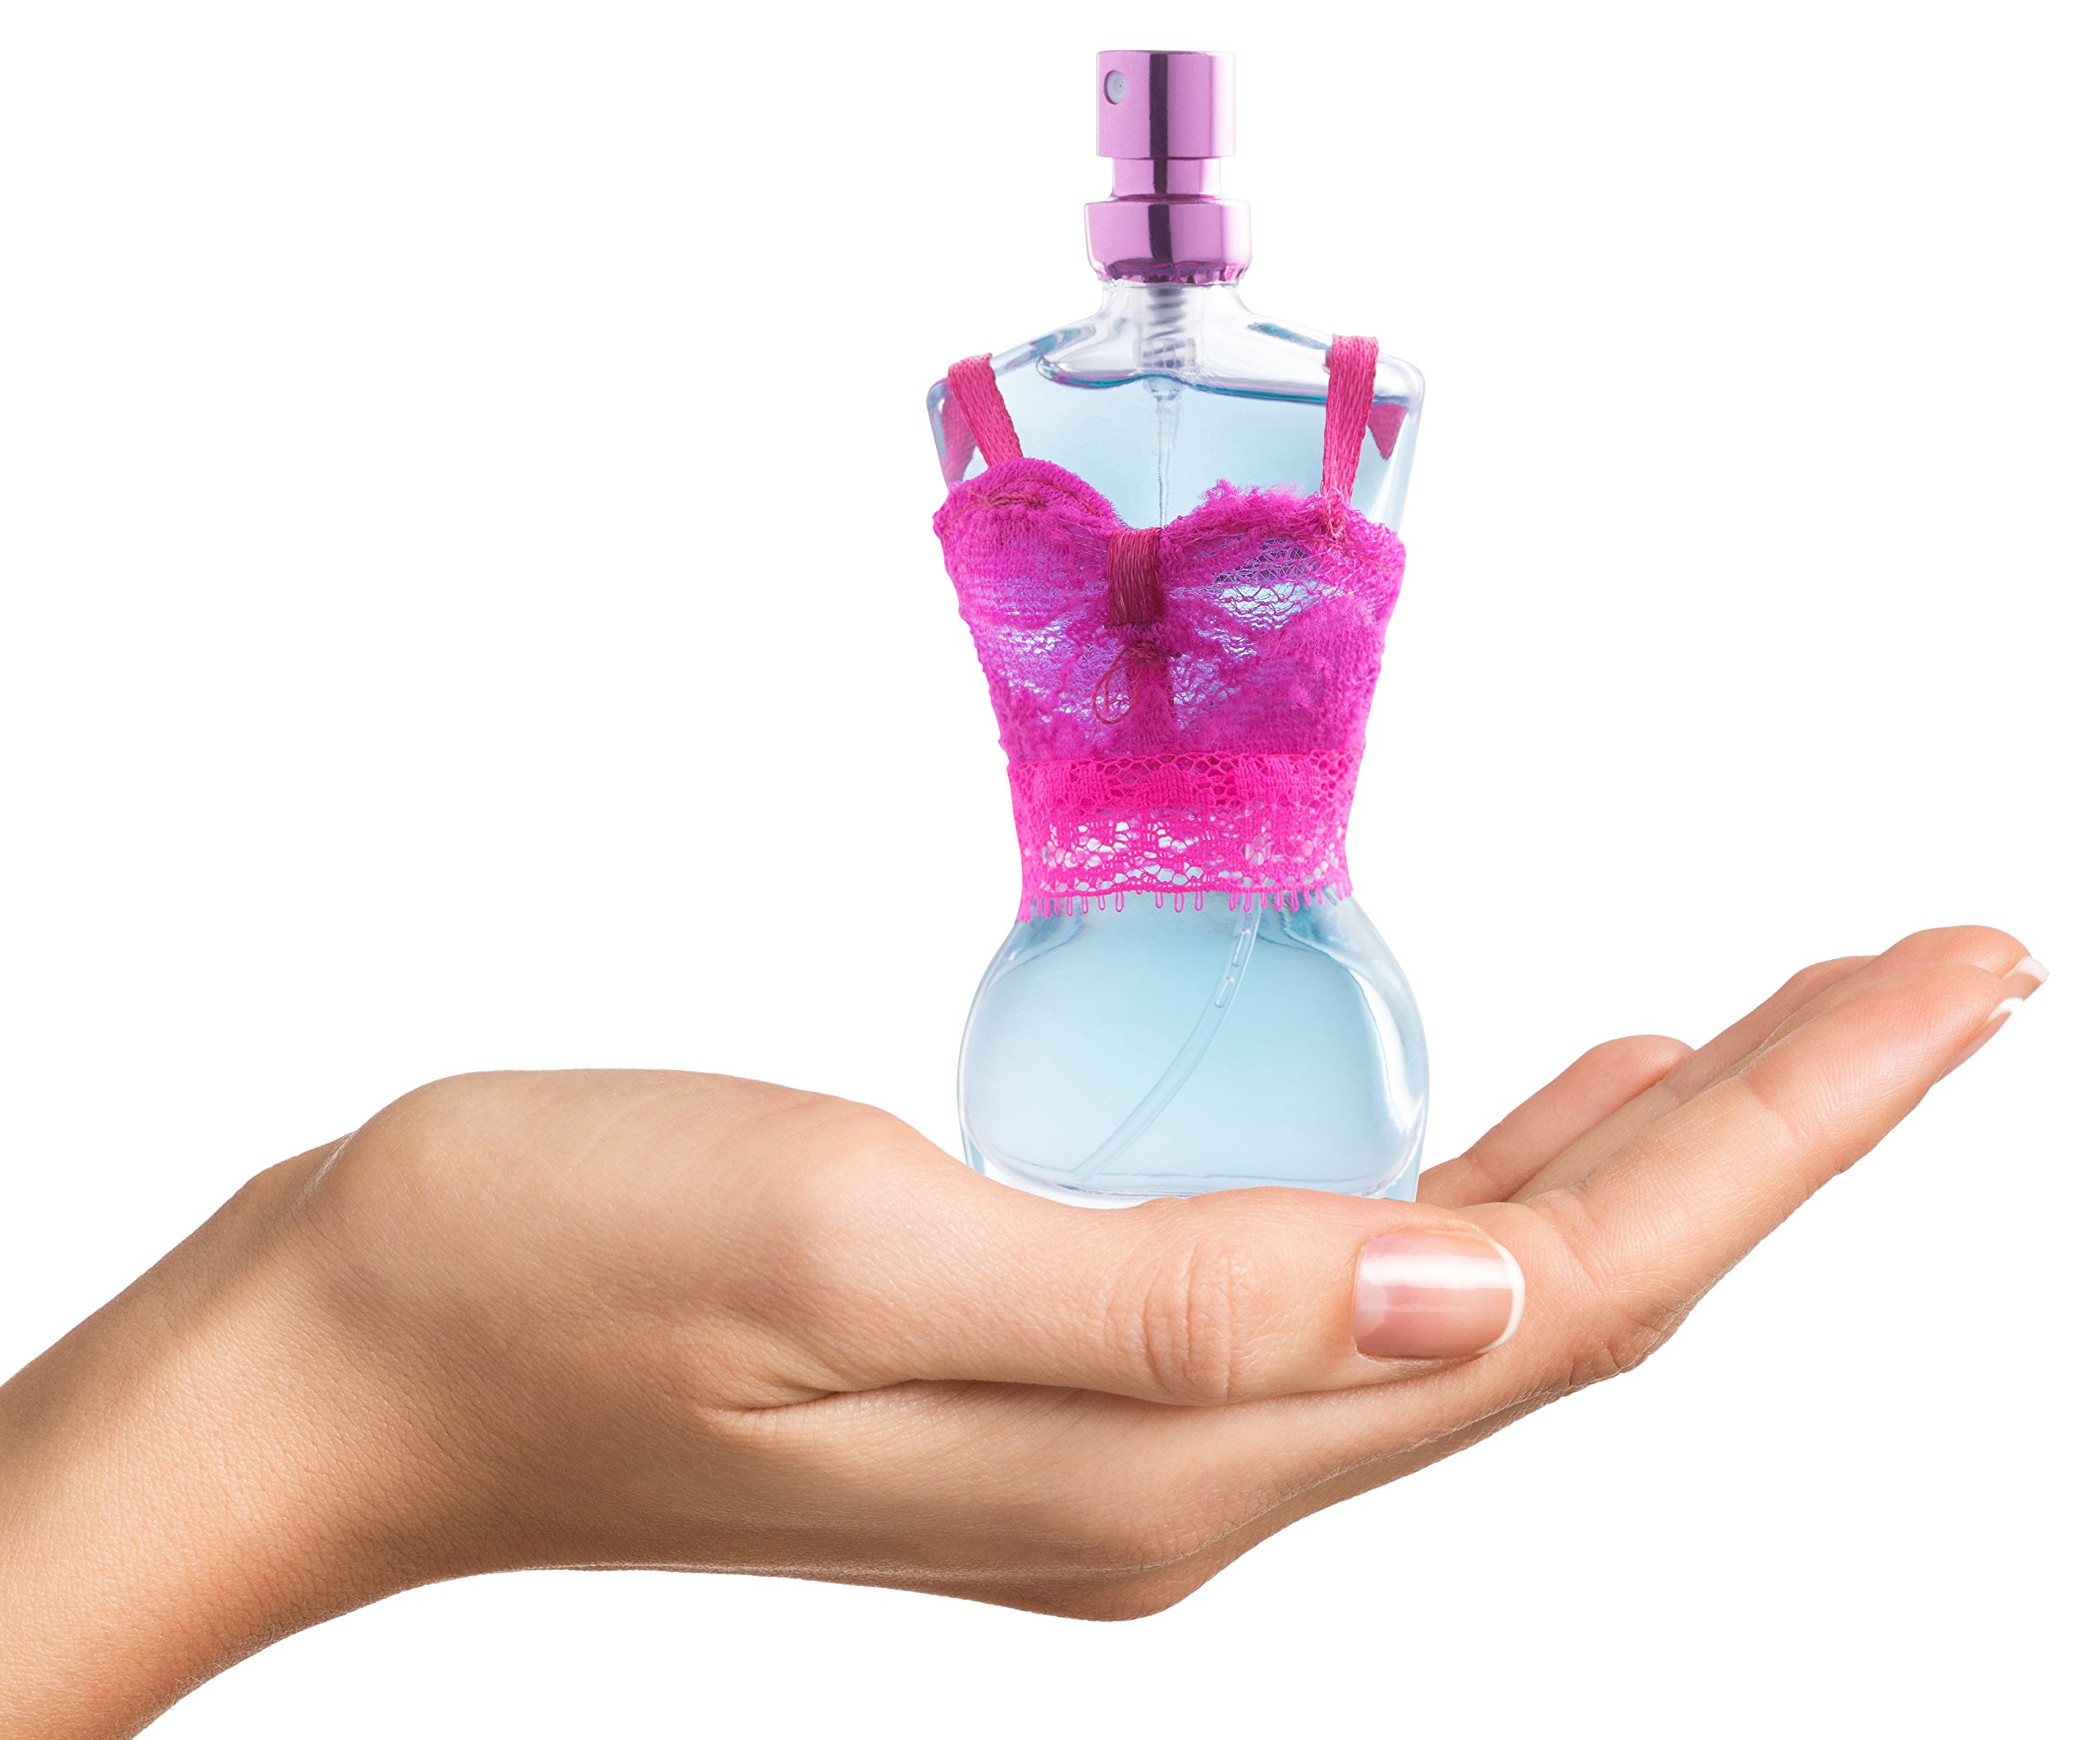 SCENTED THINGS Inspire Body Spray Girl Perfume, Eau De Parfum Teen Girl Gifts, Mannequin Figure Shaped Perfume 3 Piece Set